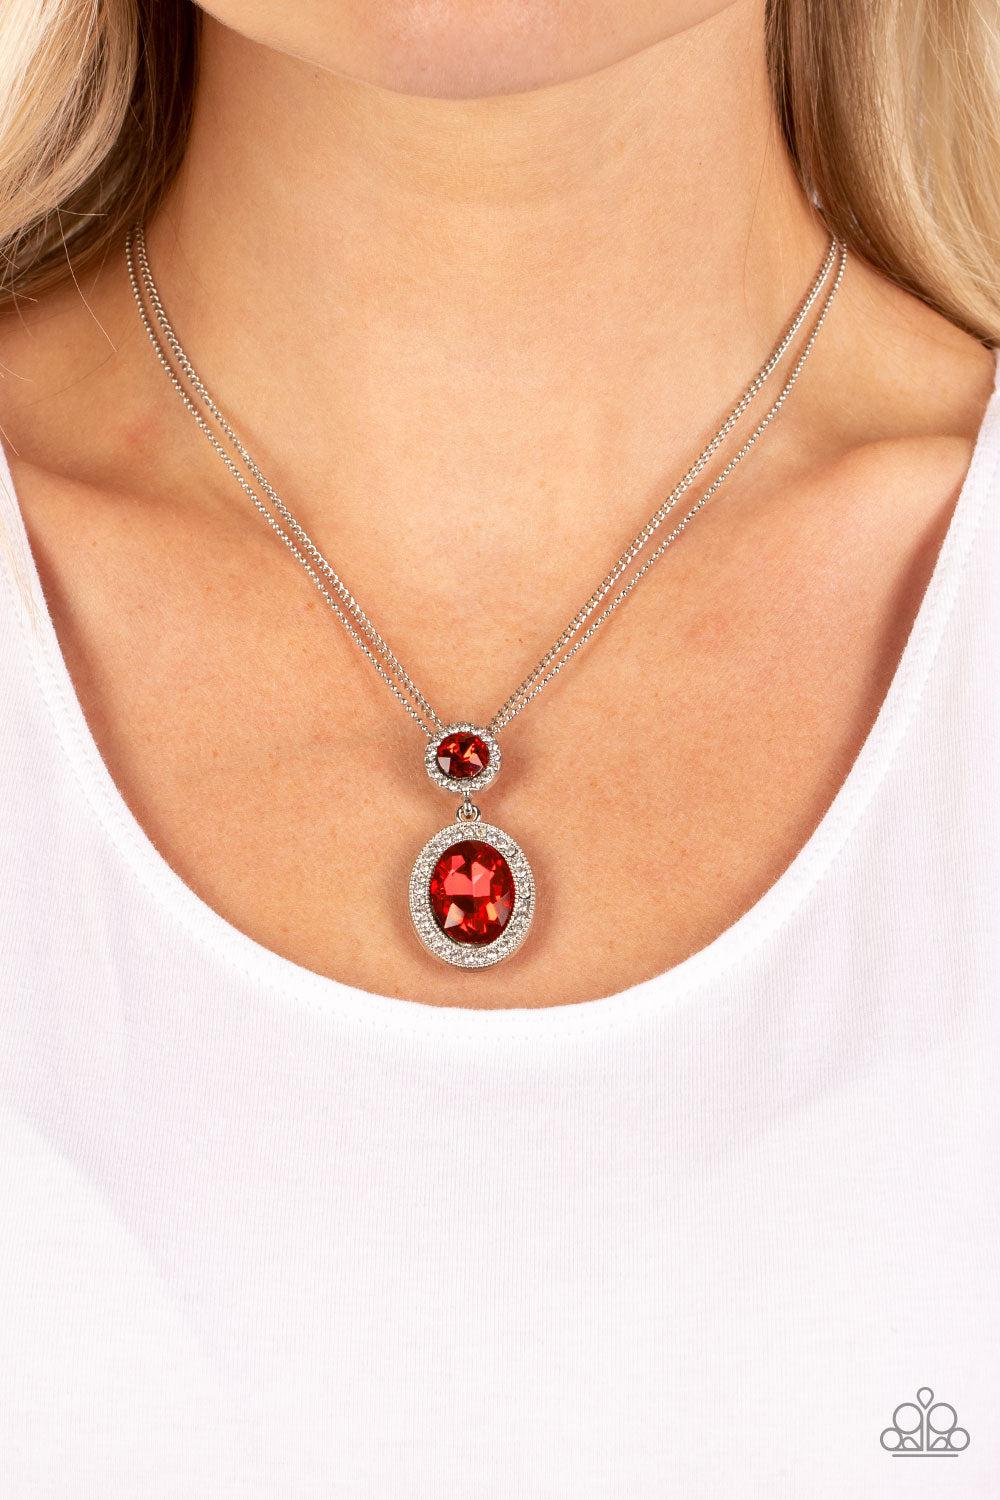 Castle Diamonds Red Rhinestone Necklace - Paparazzi Accessories-on model - CarasShop.com - $5 Jewelry by Cara Jewels